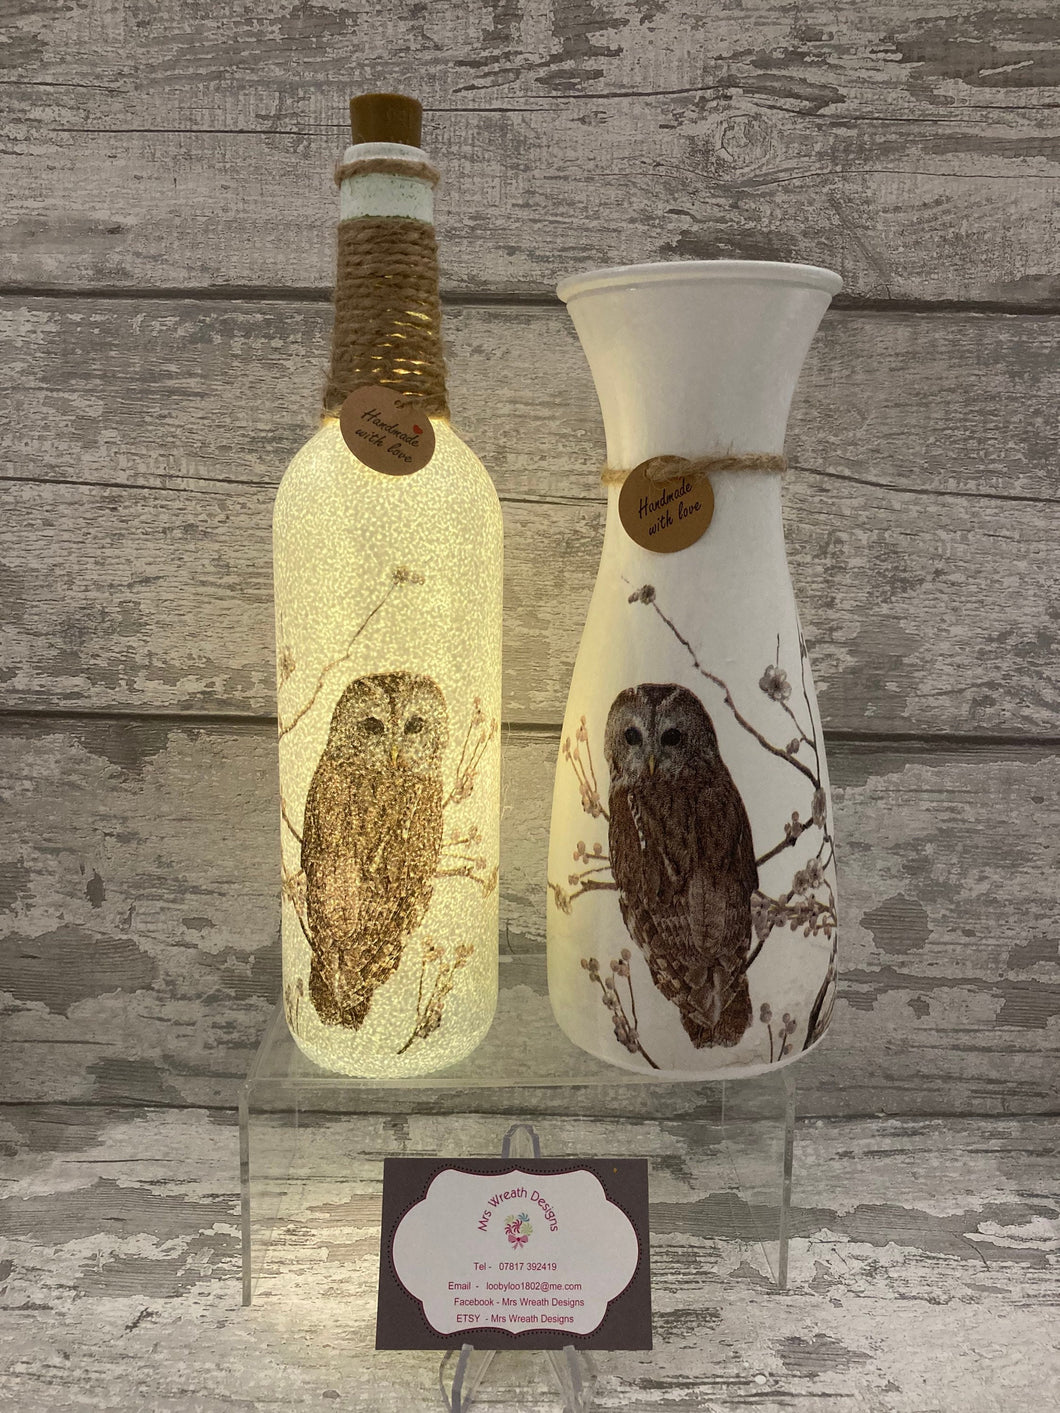 Owl light up bottle and matching vase